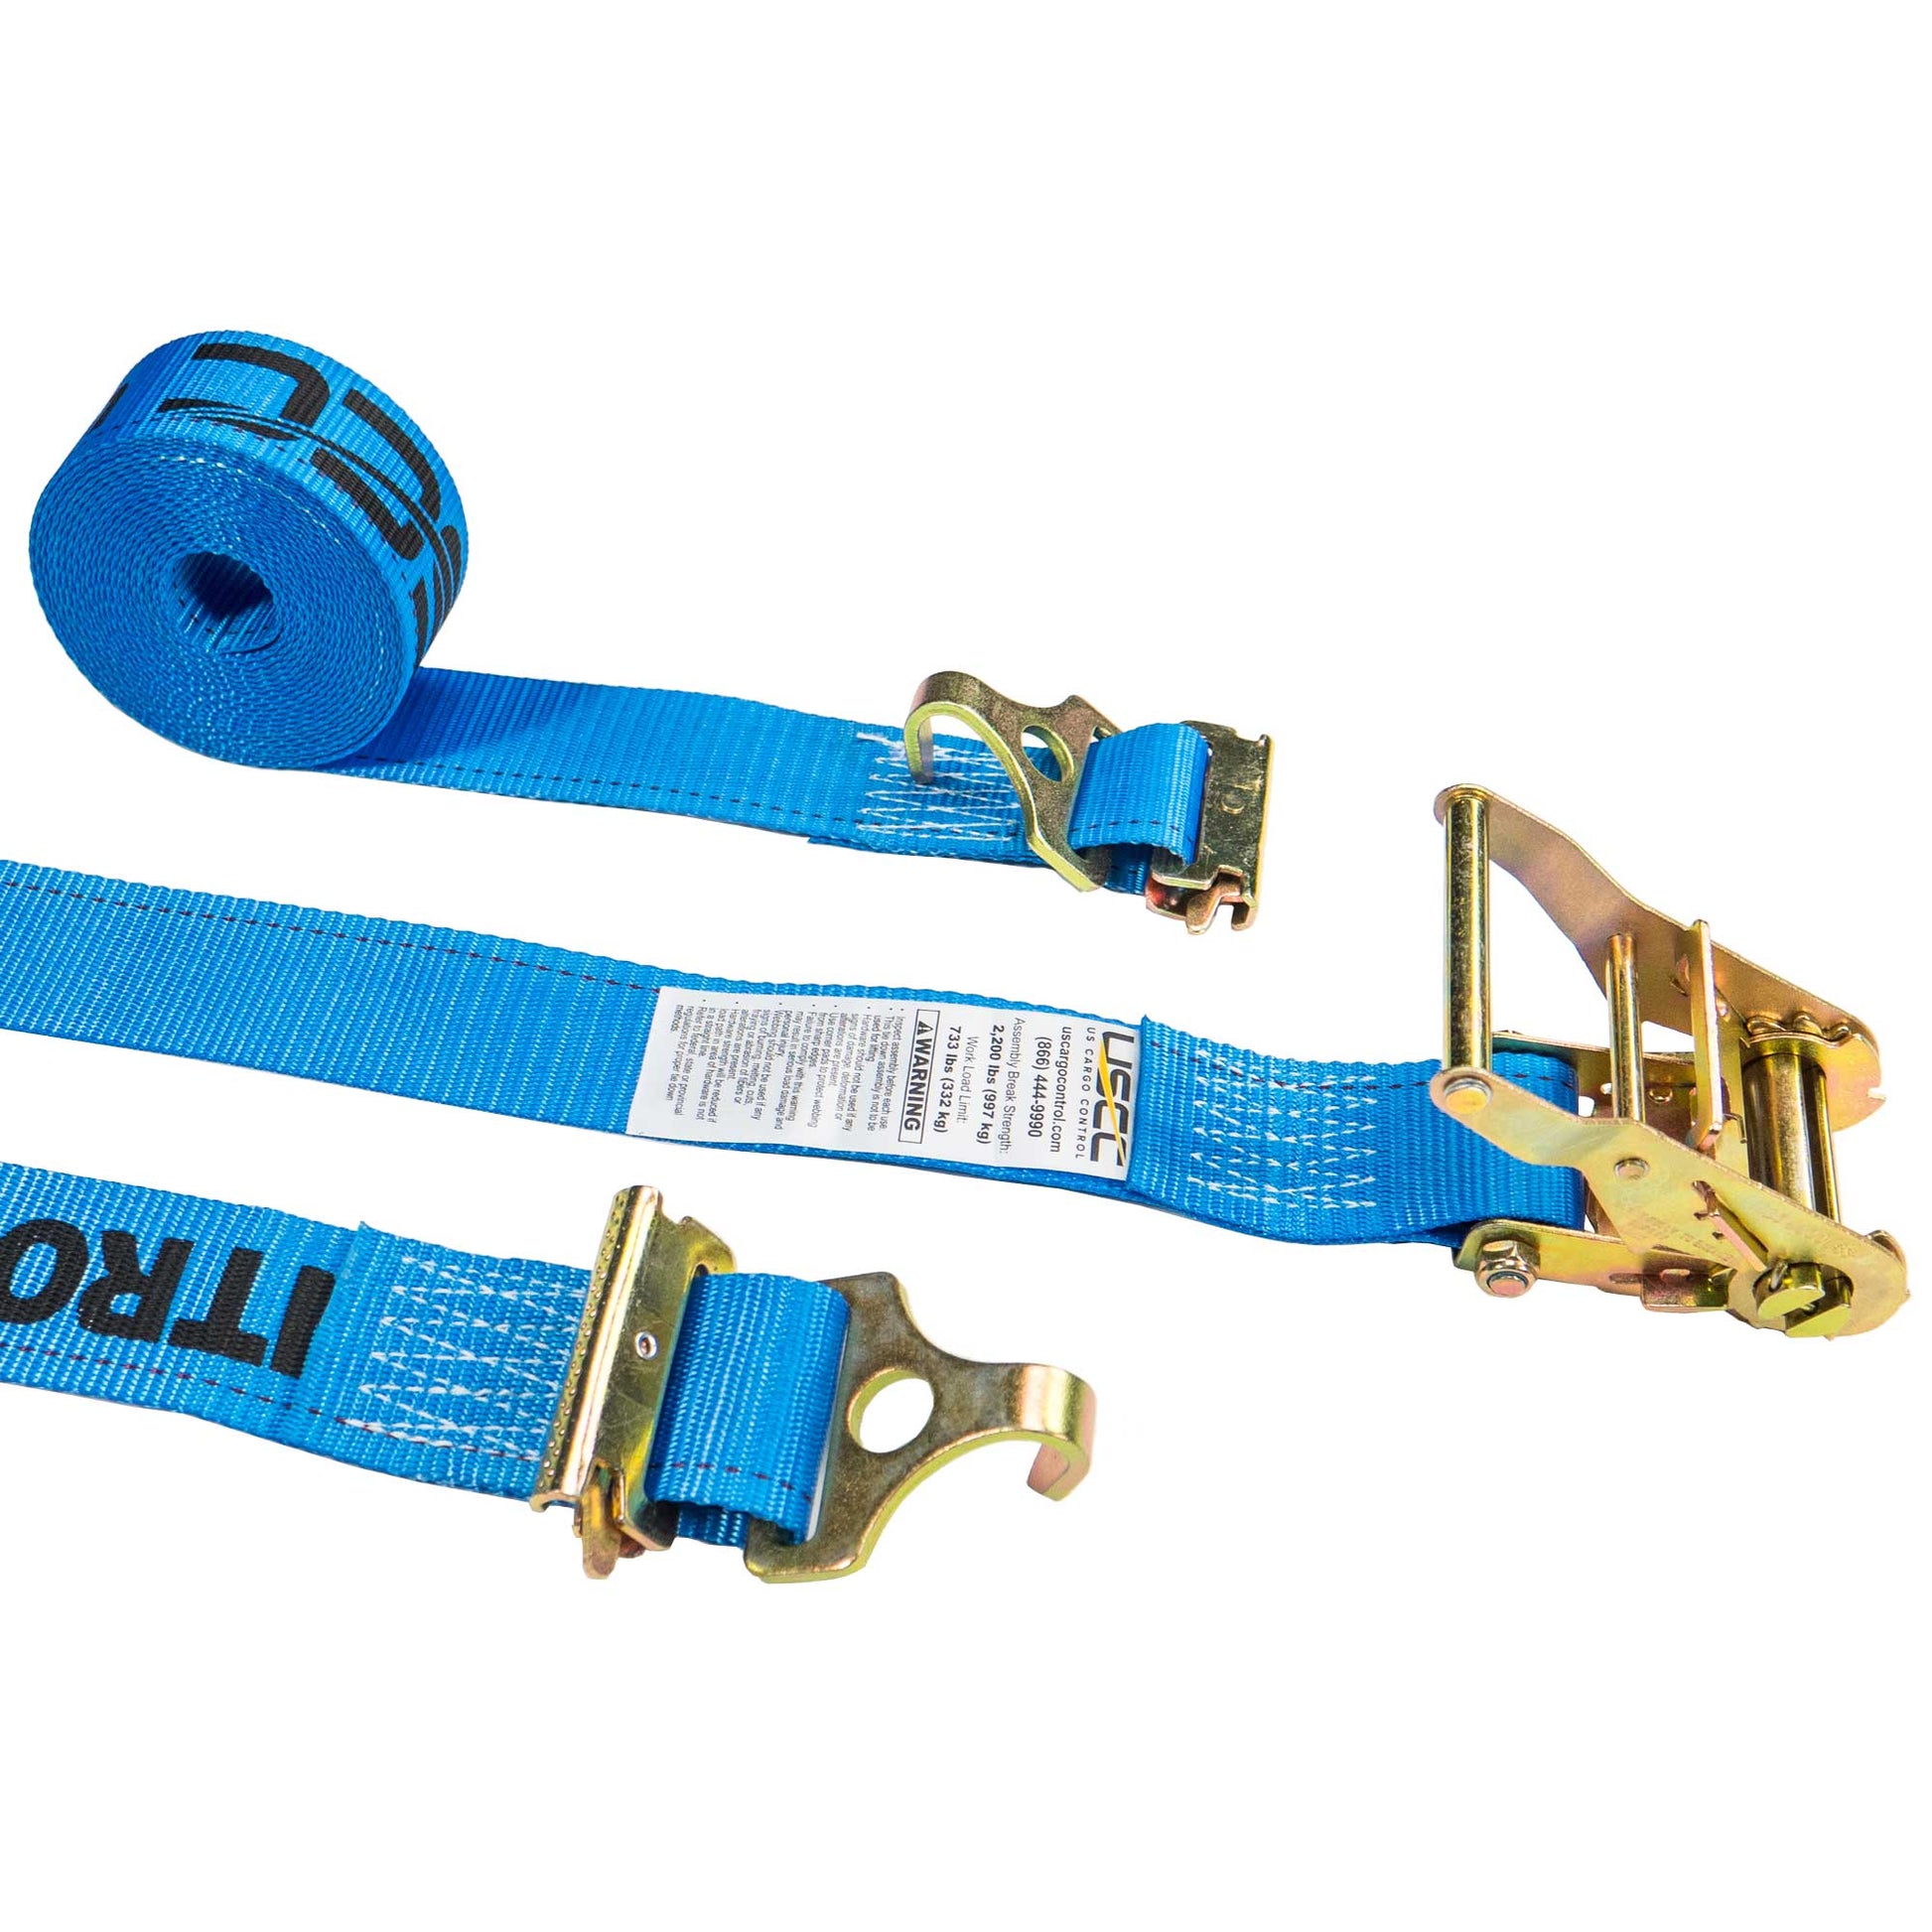  blue 20' E track ratchet strap with f track hooks